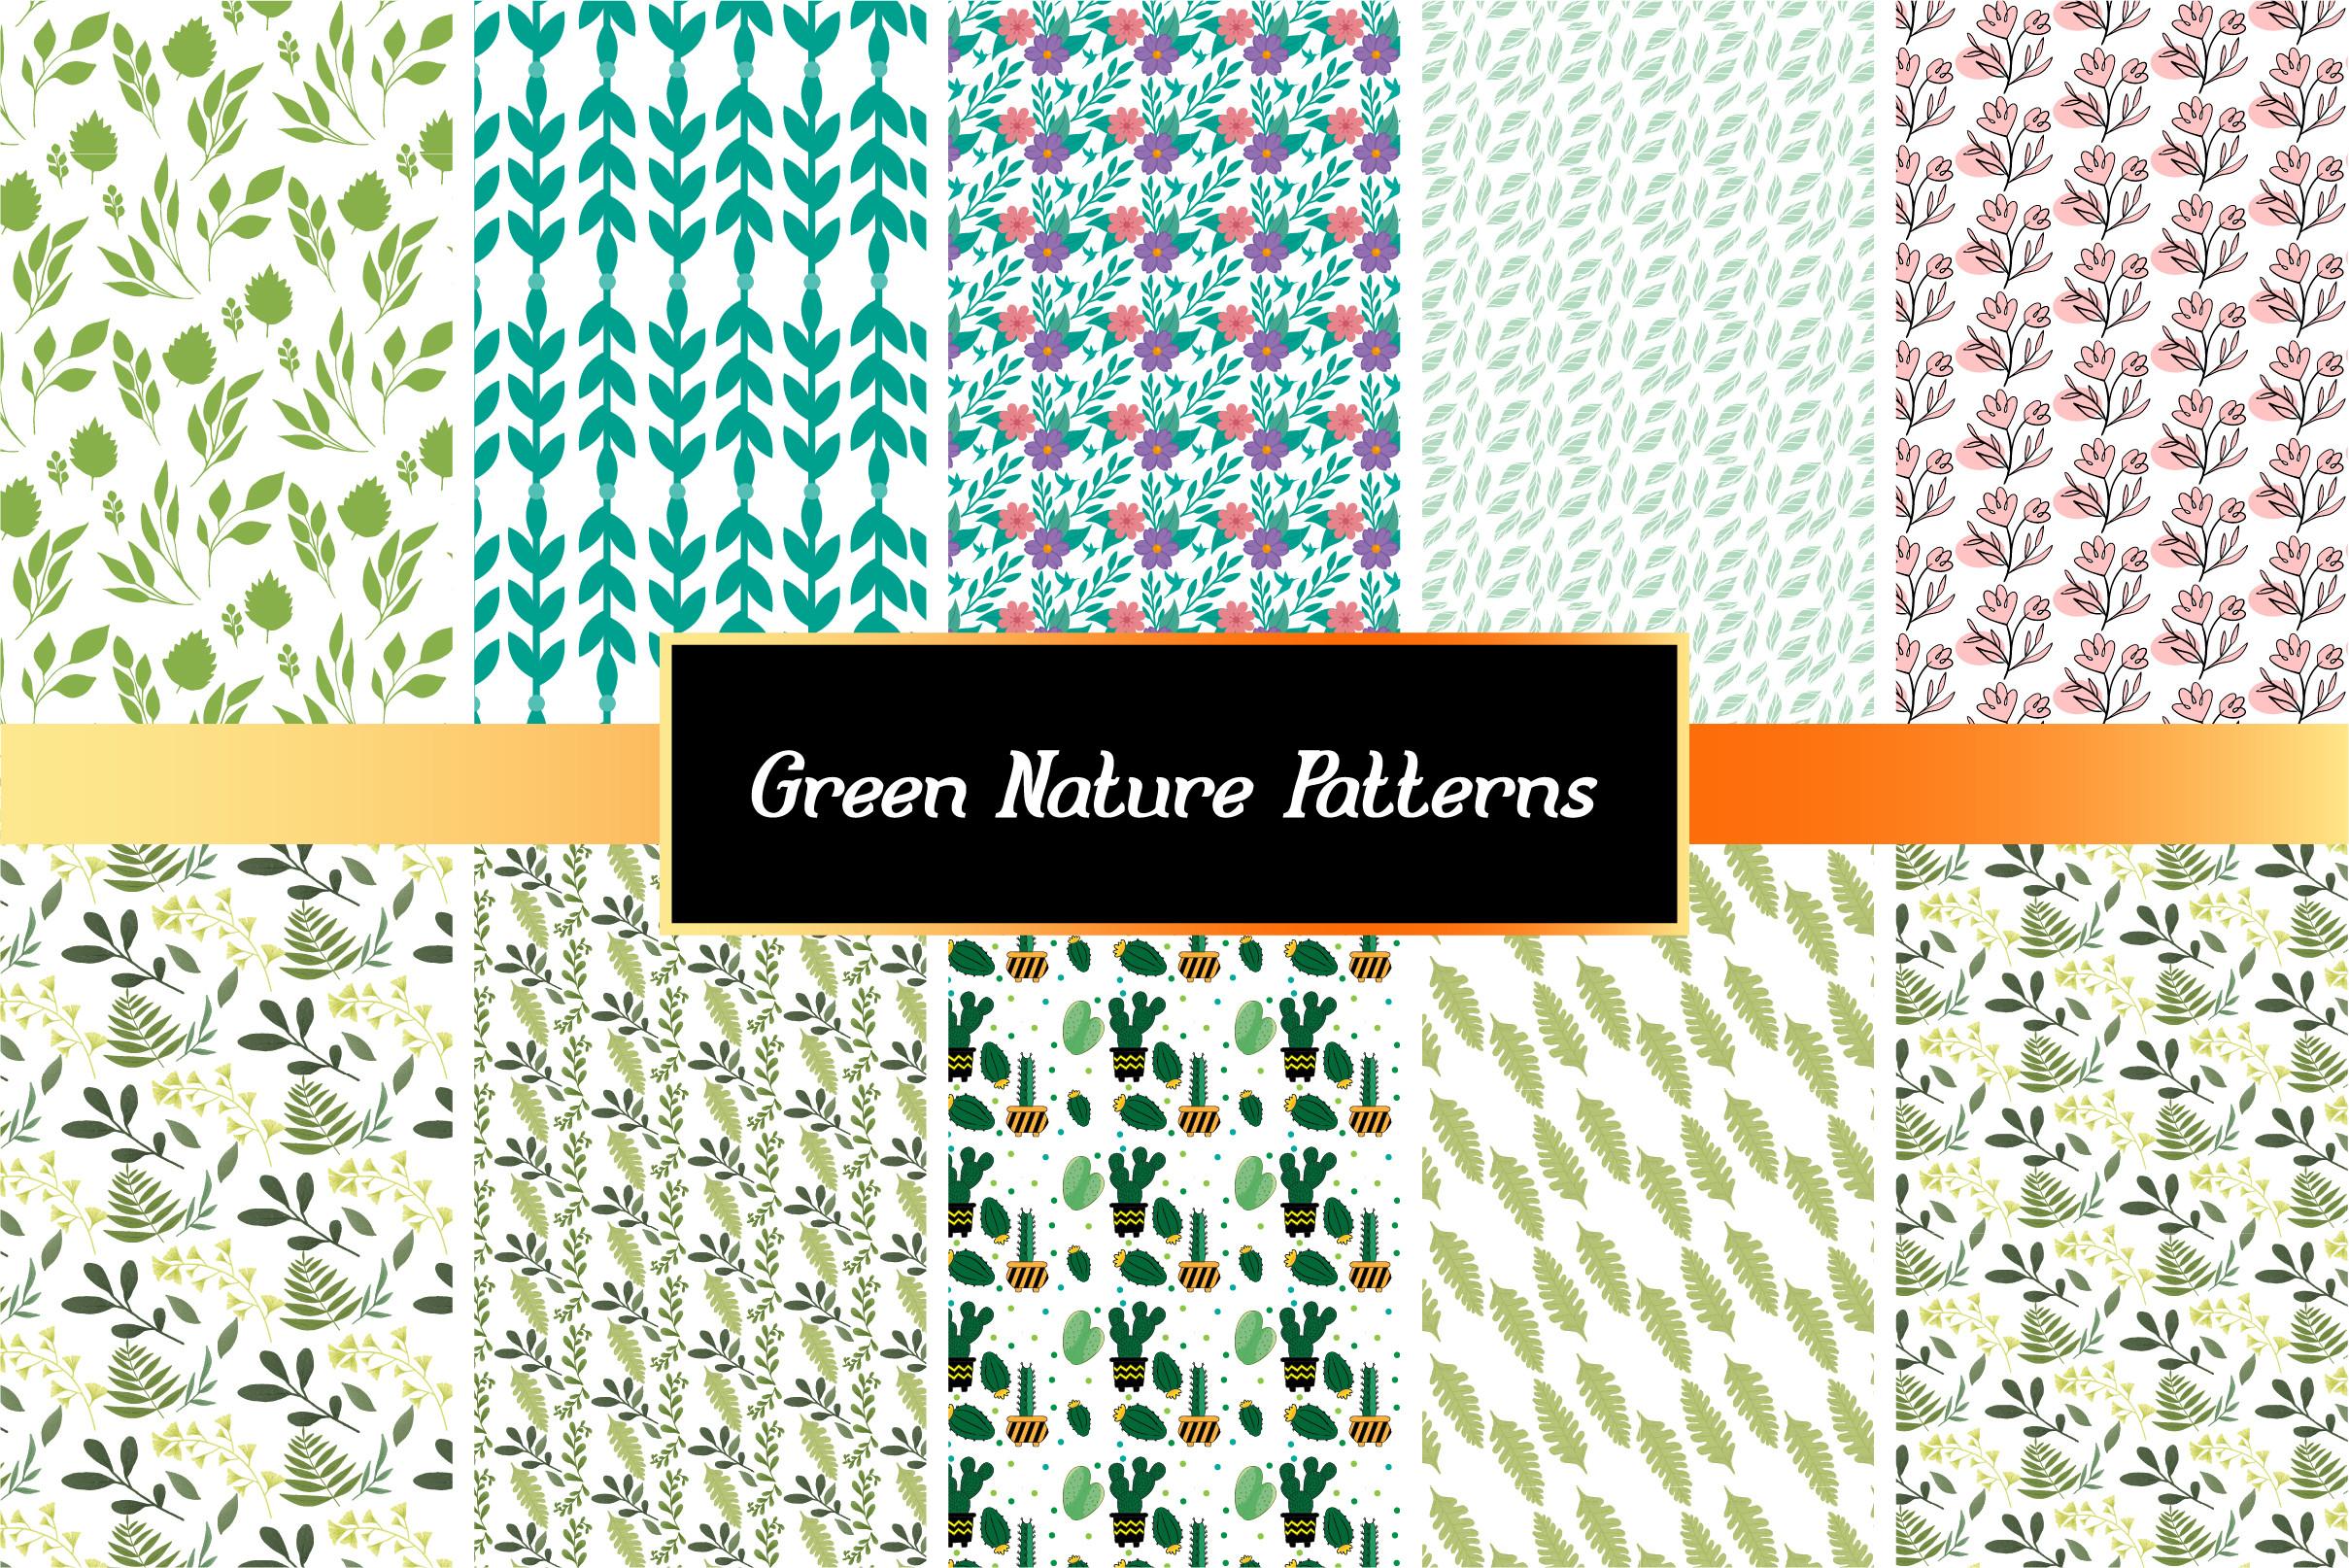 Green Nature Patterns